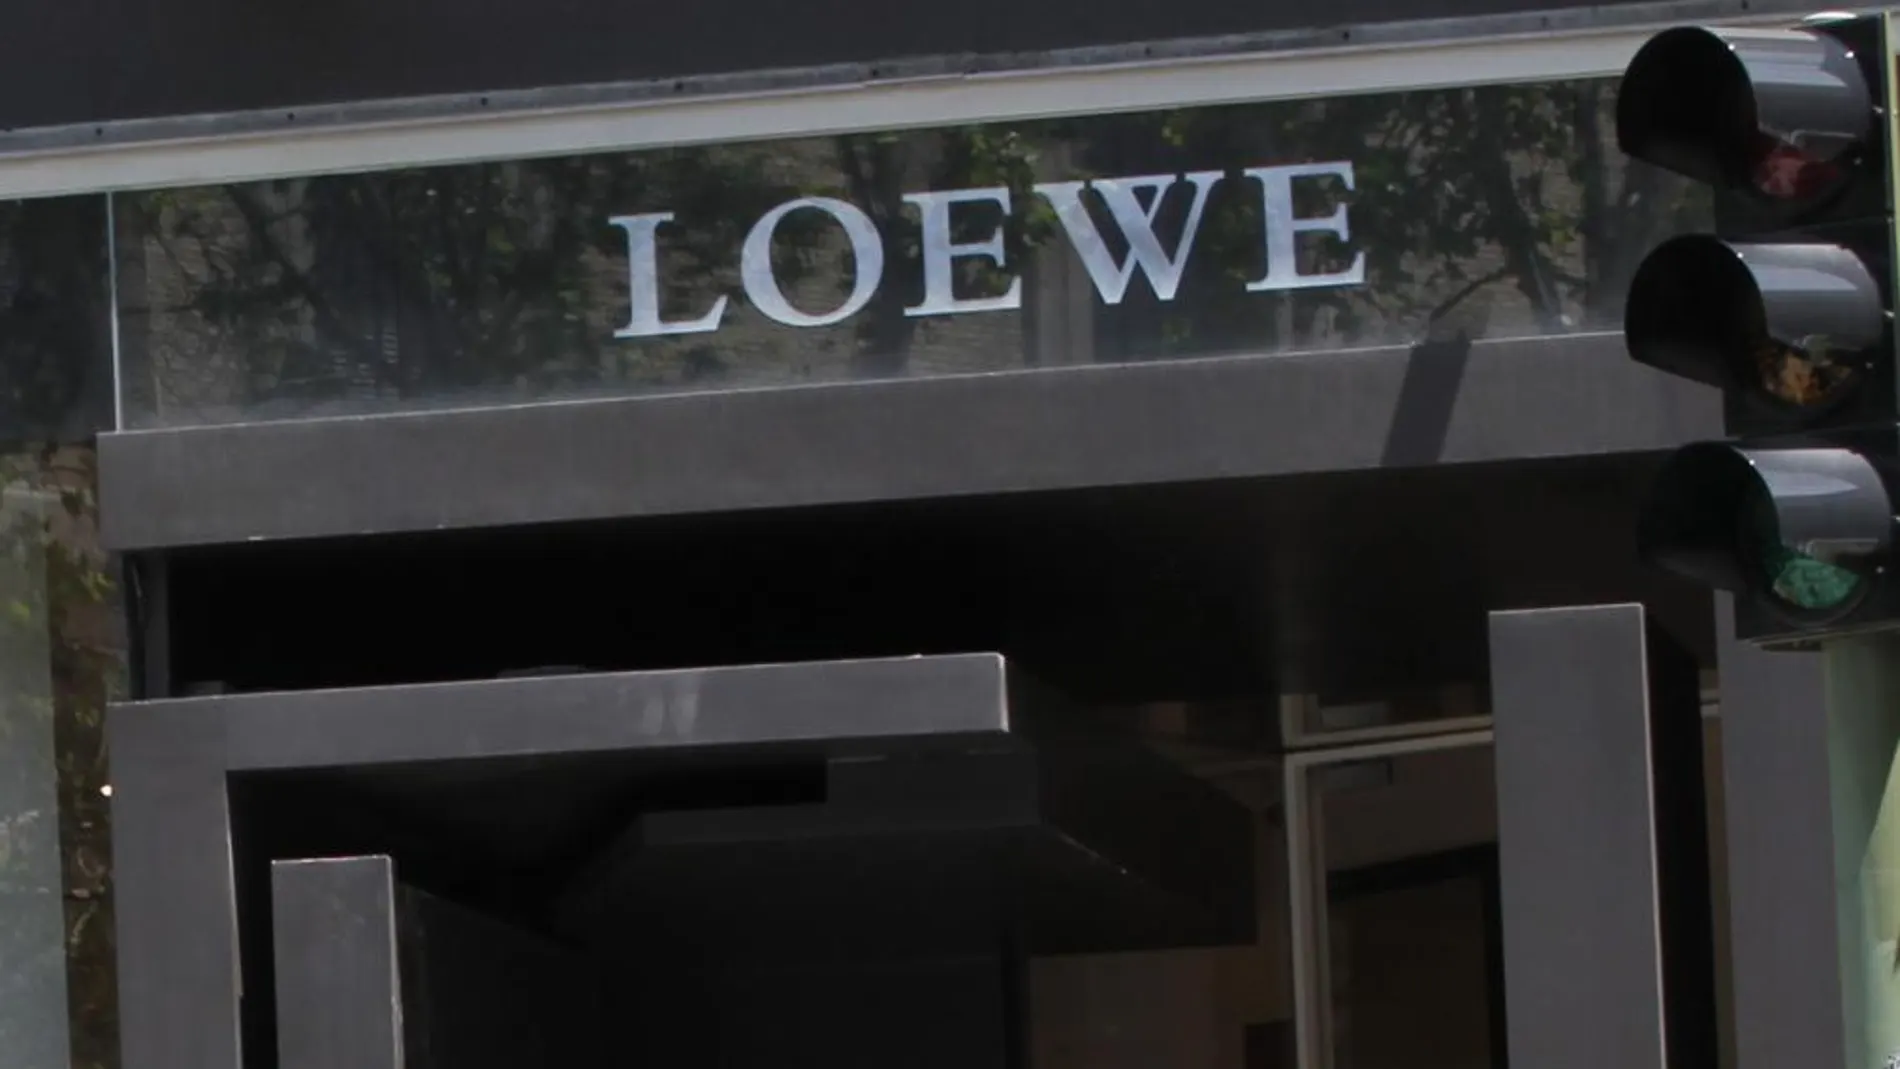 Loewe, un fin de semana de puertas abiertas